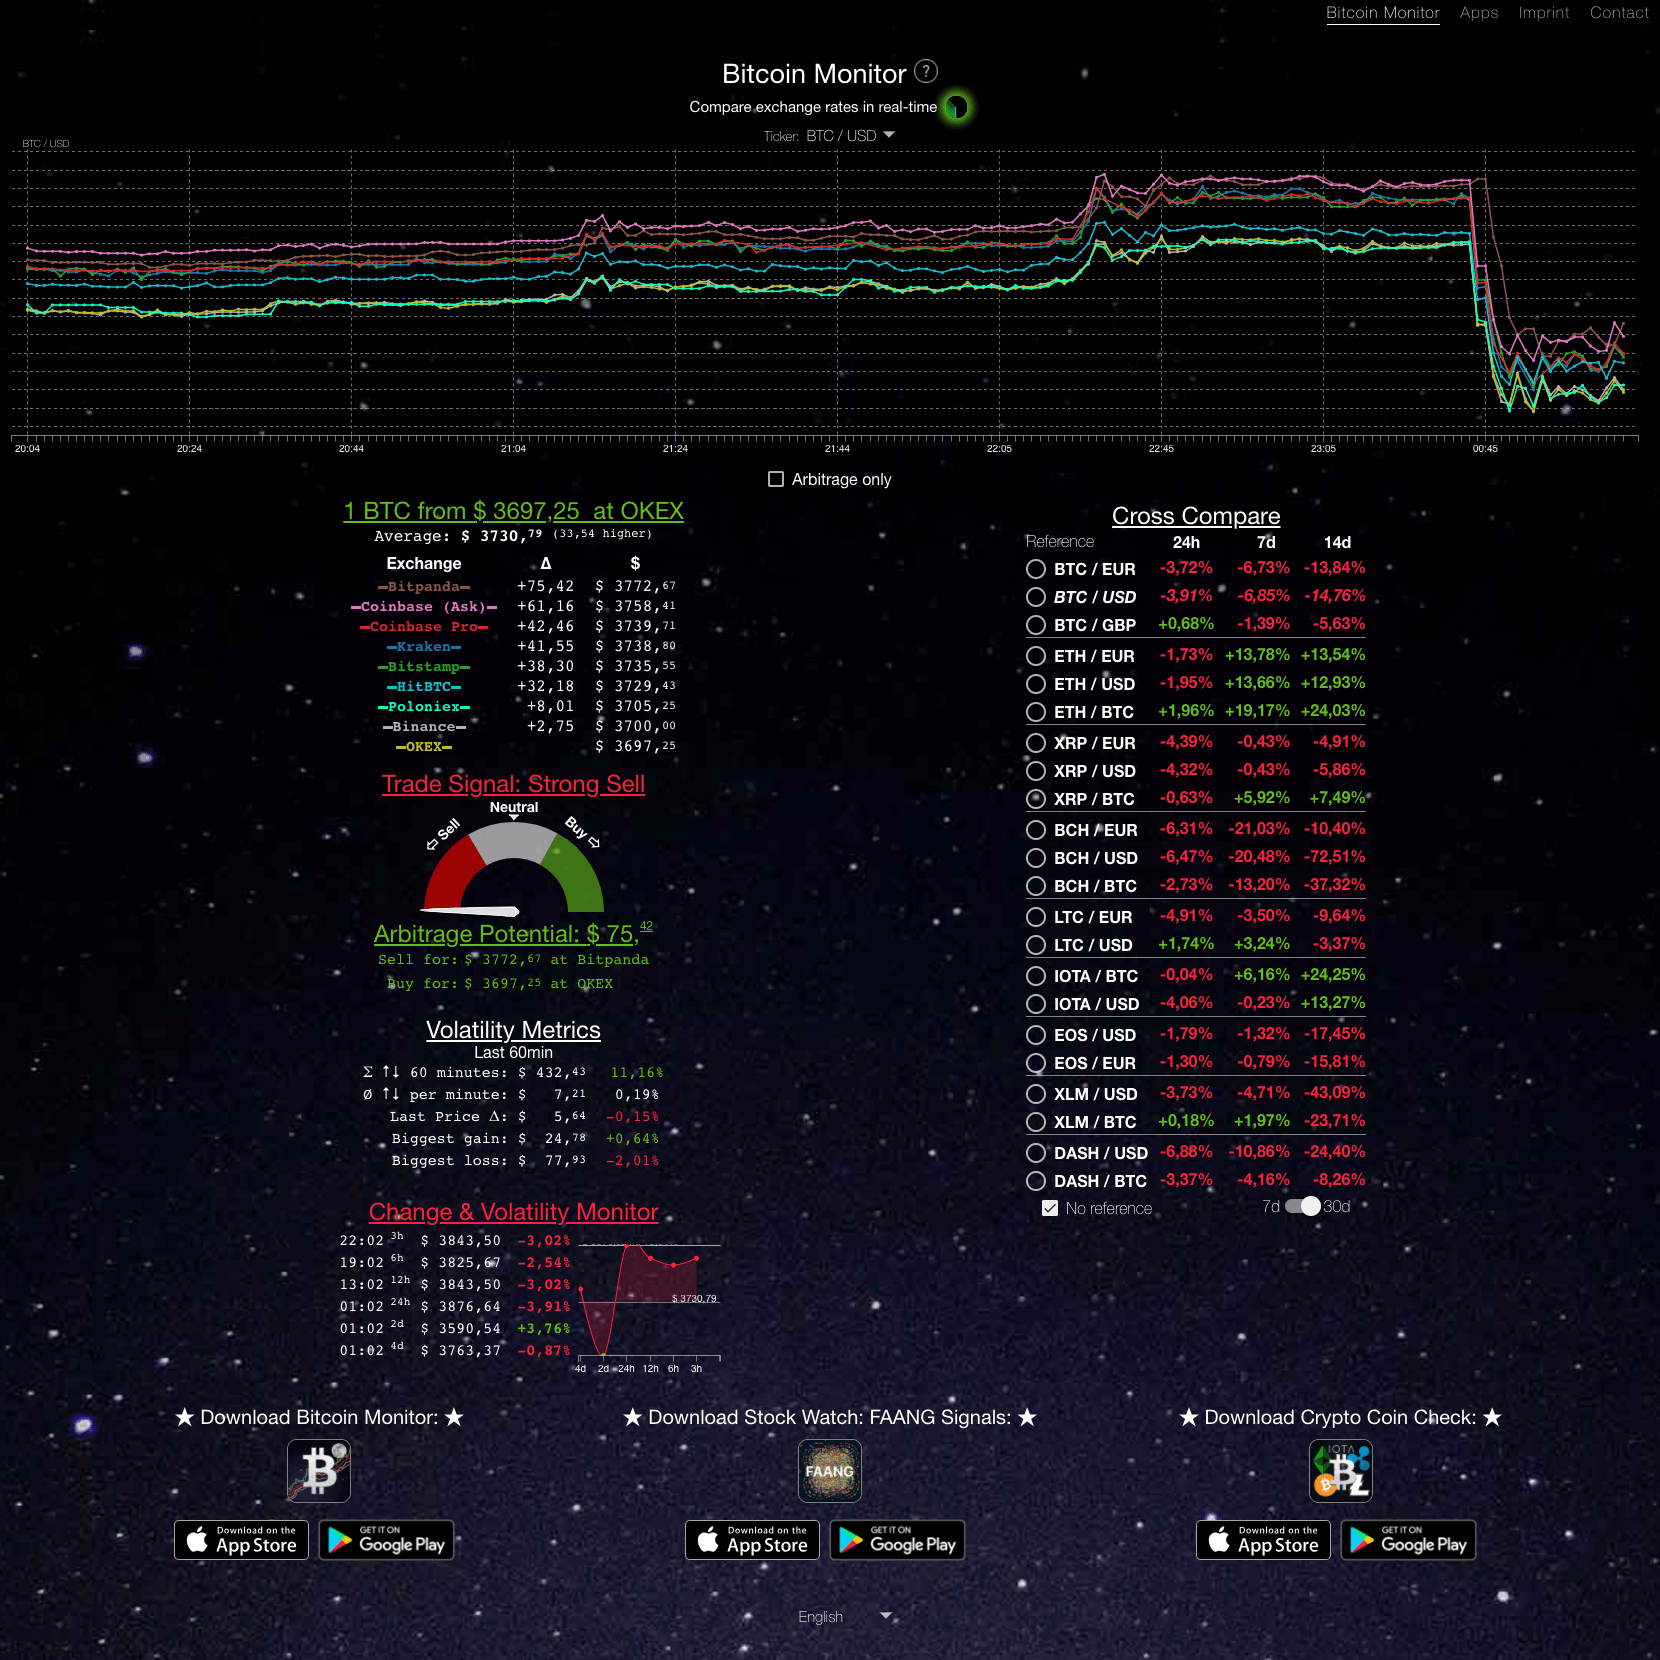 Bitcoin Price Monitor - BTC Price, Charts & News